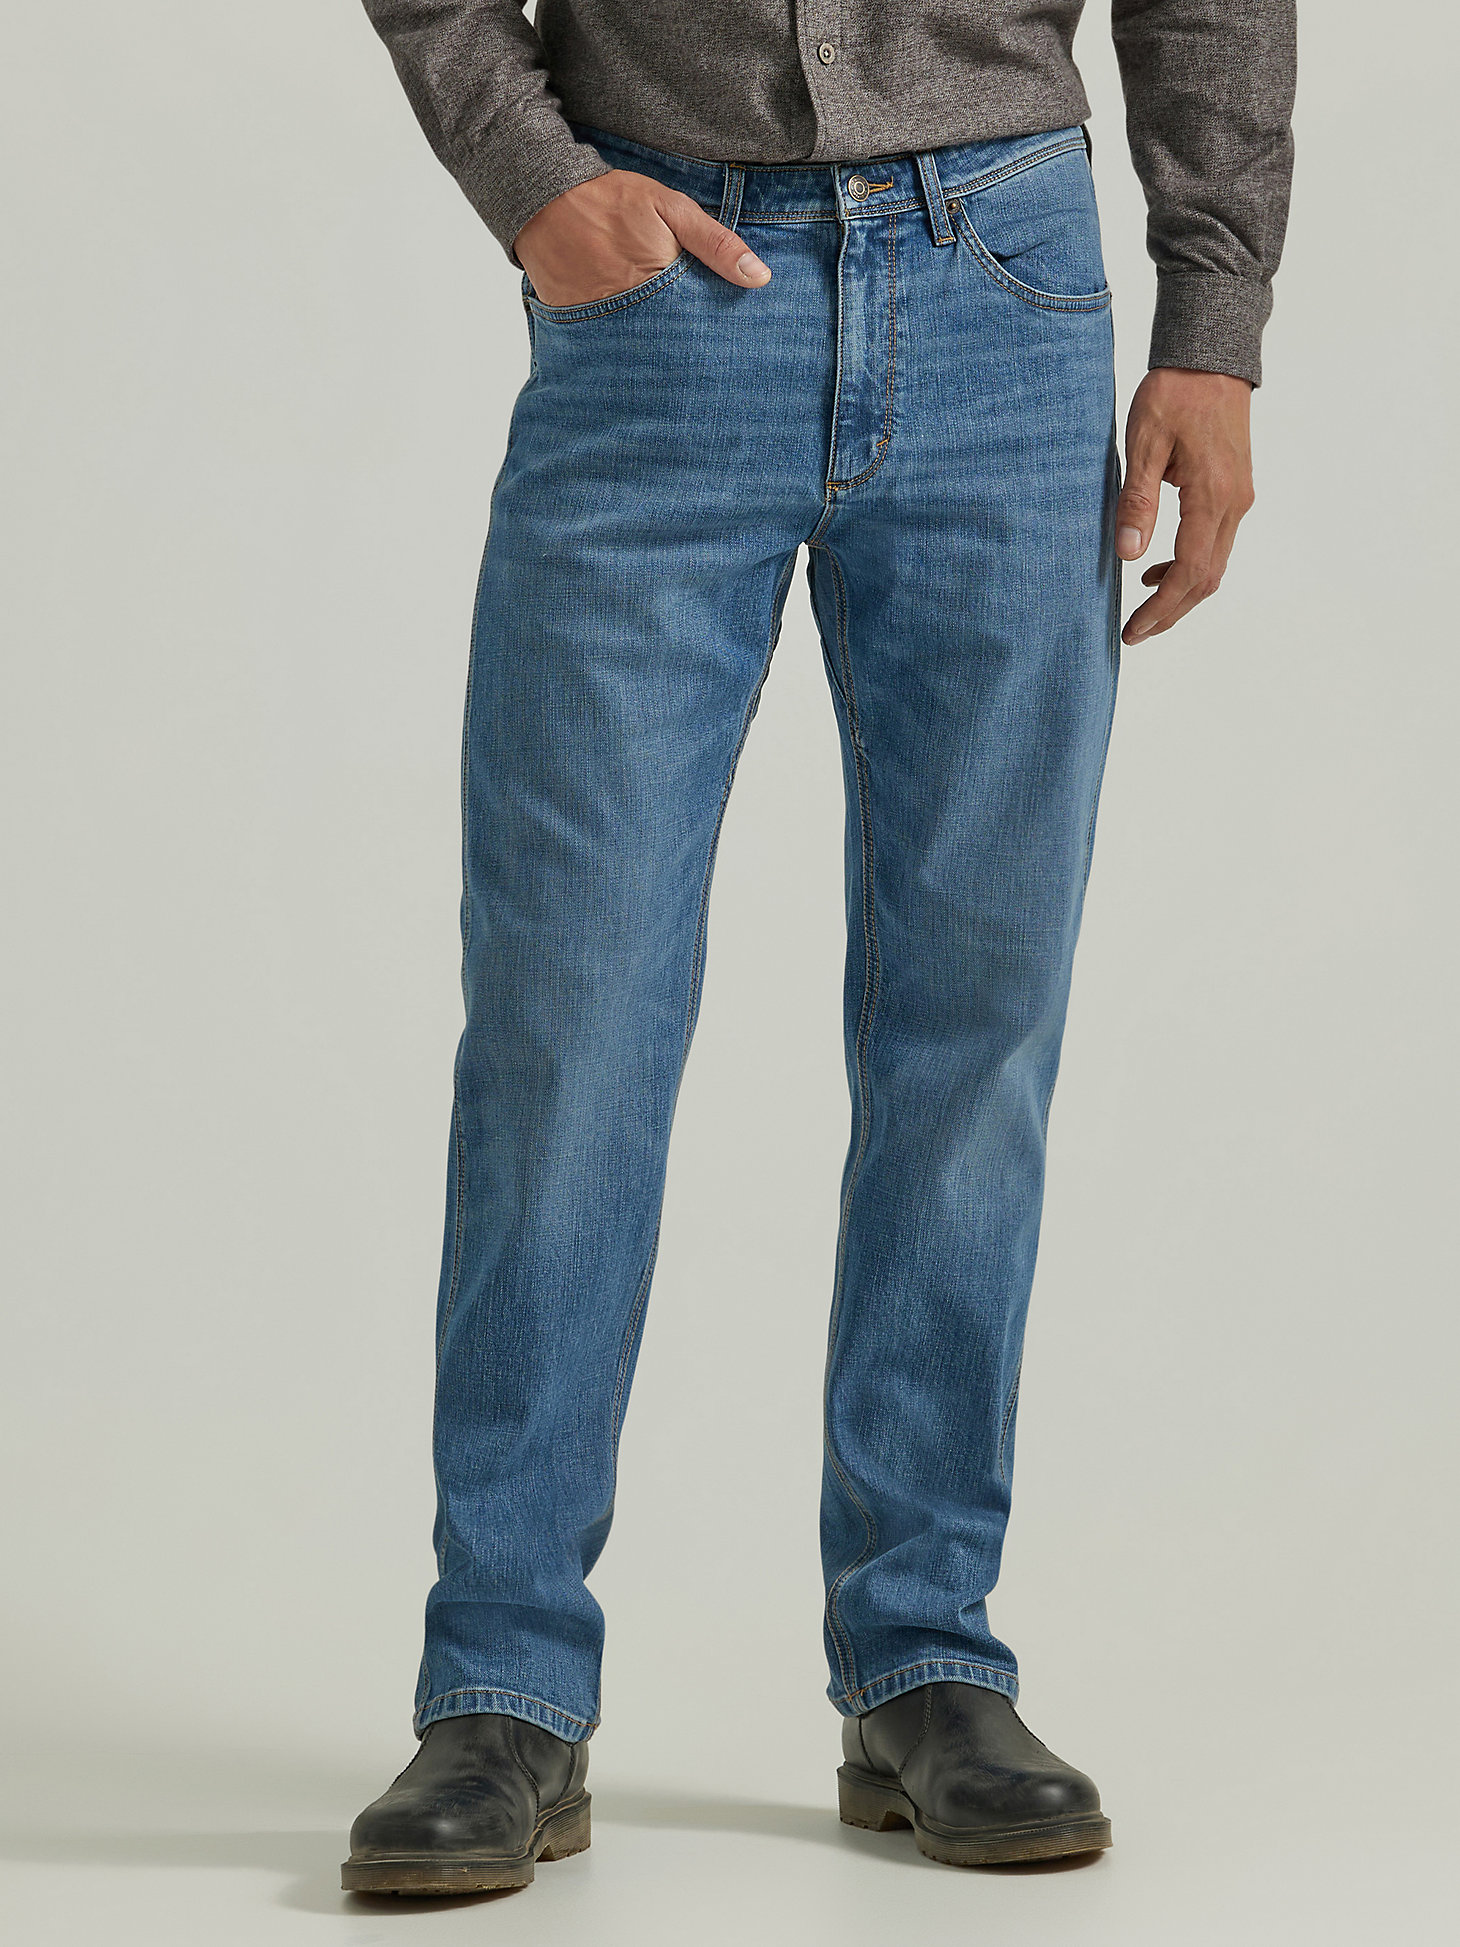 Men's Comfort That Won't Quit Regular Fit Jean in Medium Blue alternative view 4